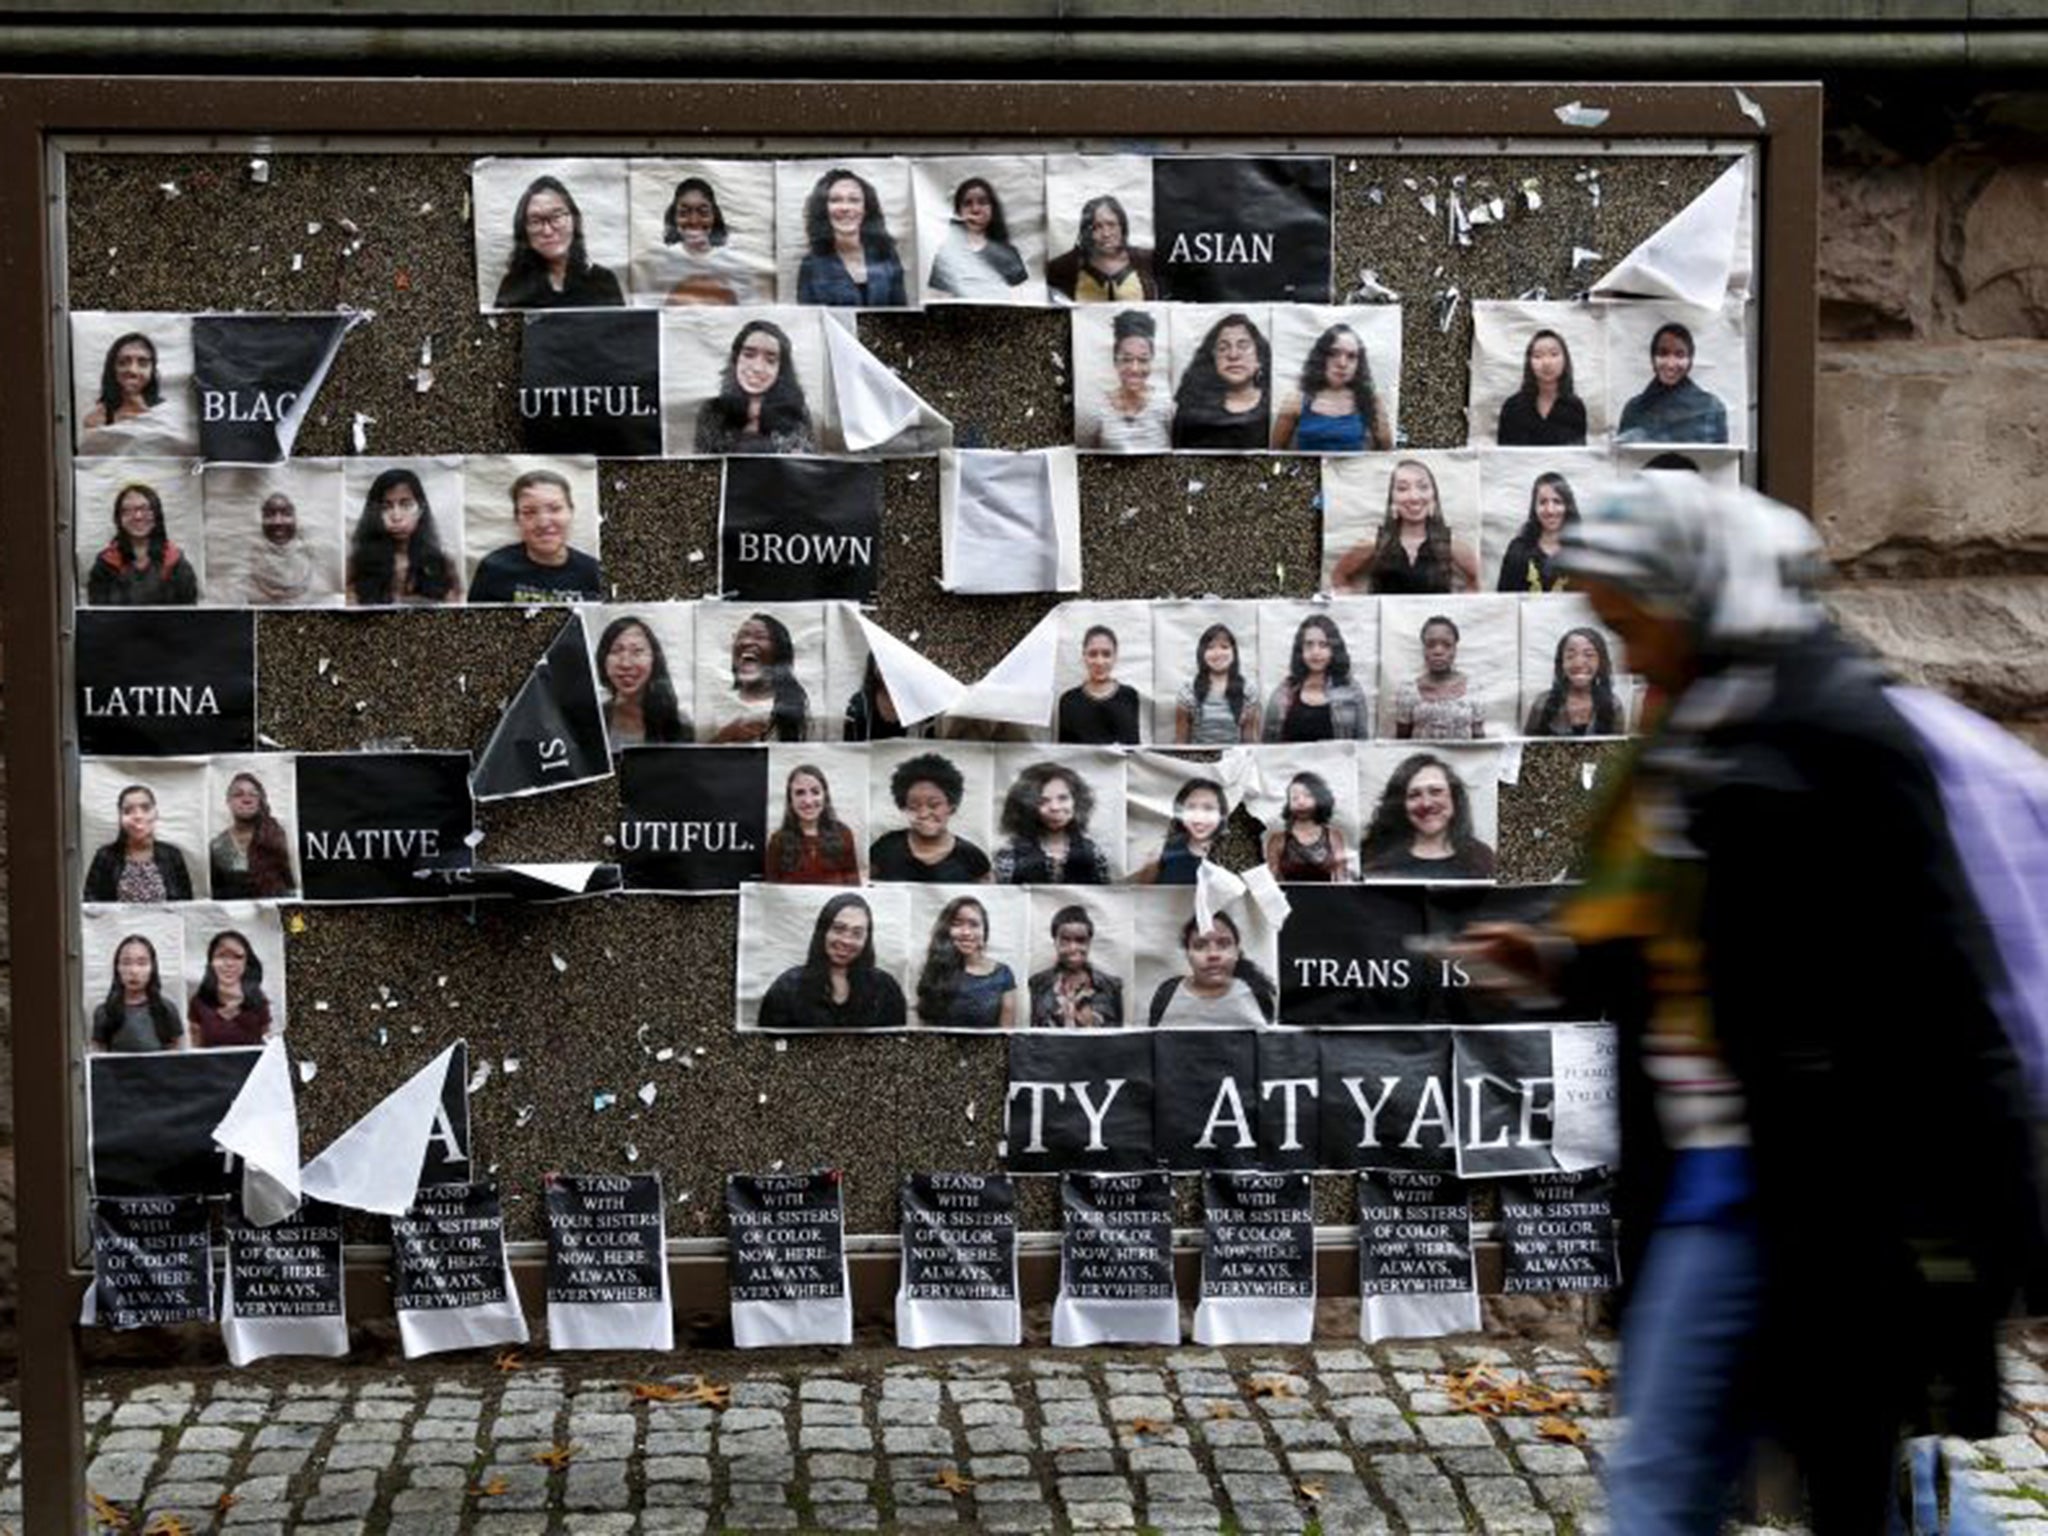 A board emphasizing the importance of diversity at Yale Univeristy